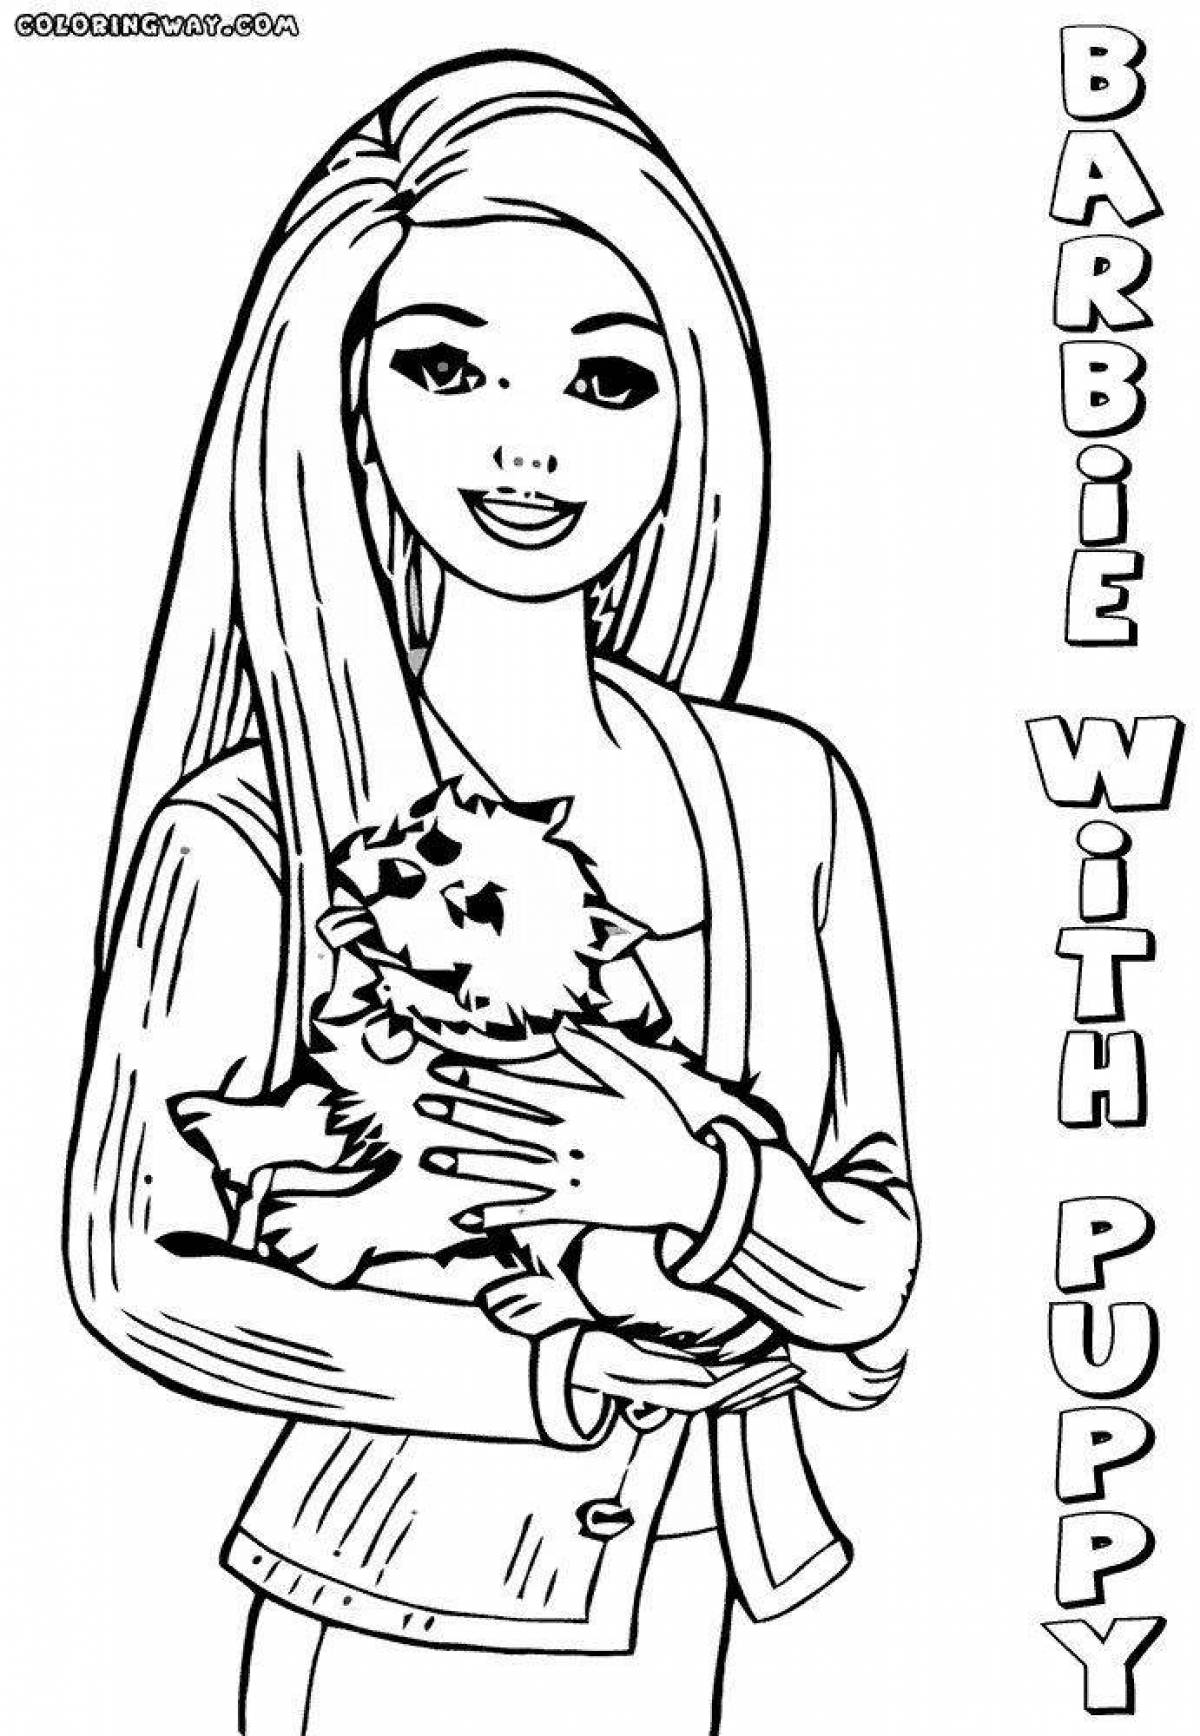 Barbie with dog #13